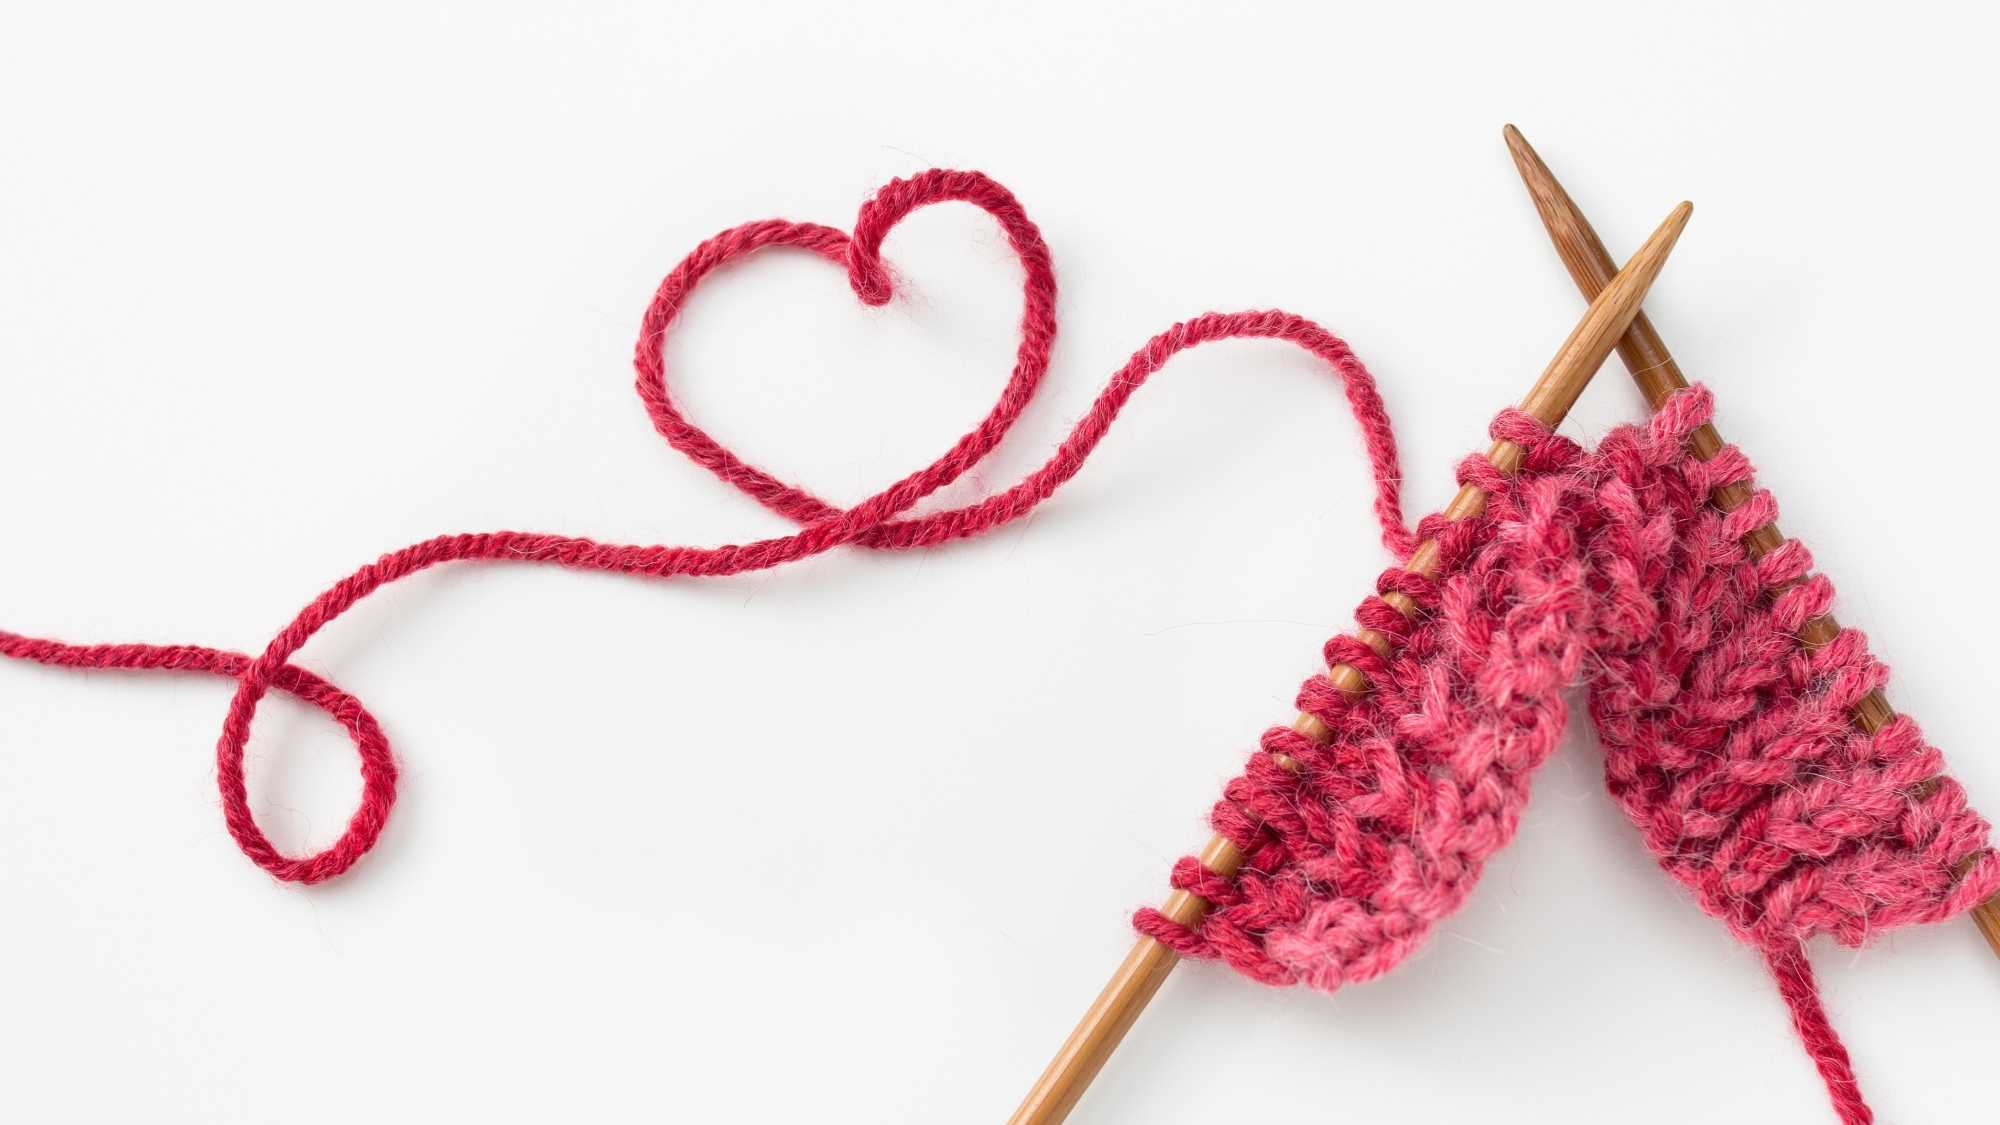 Knitting with Kids: Benefits, Basics, & Service Project